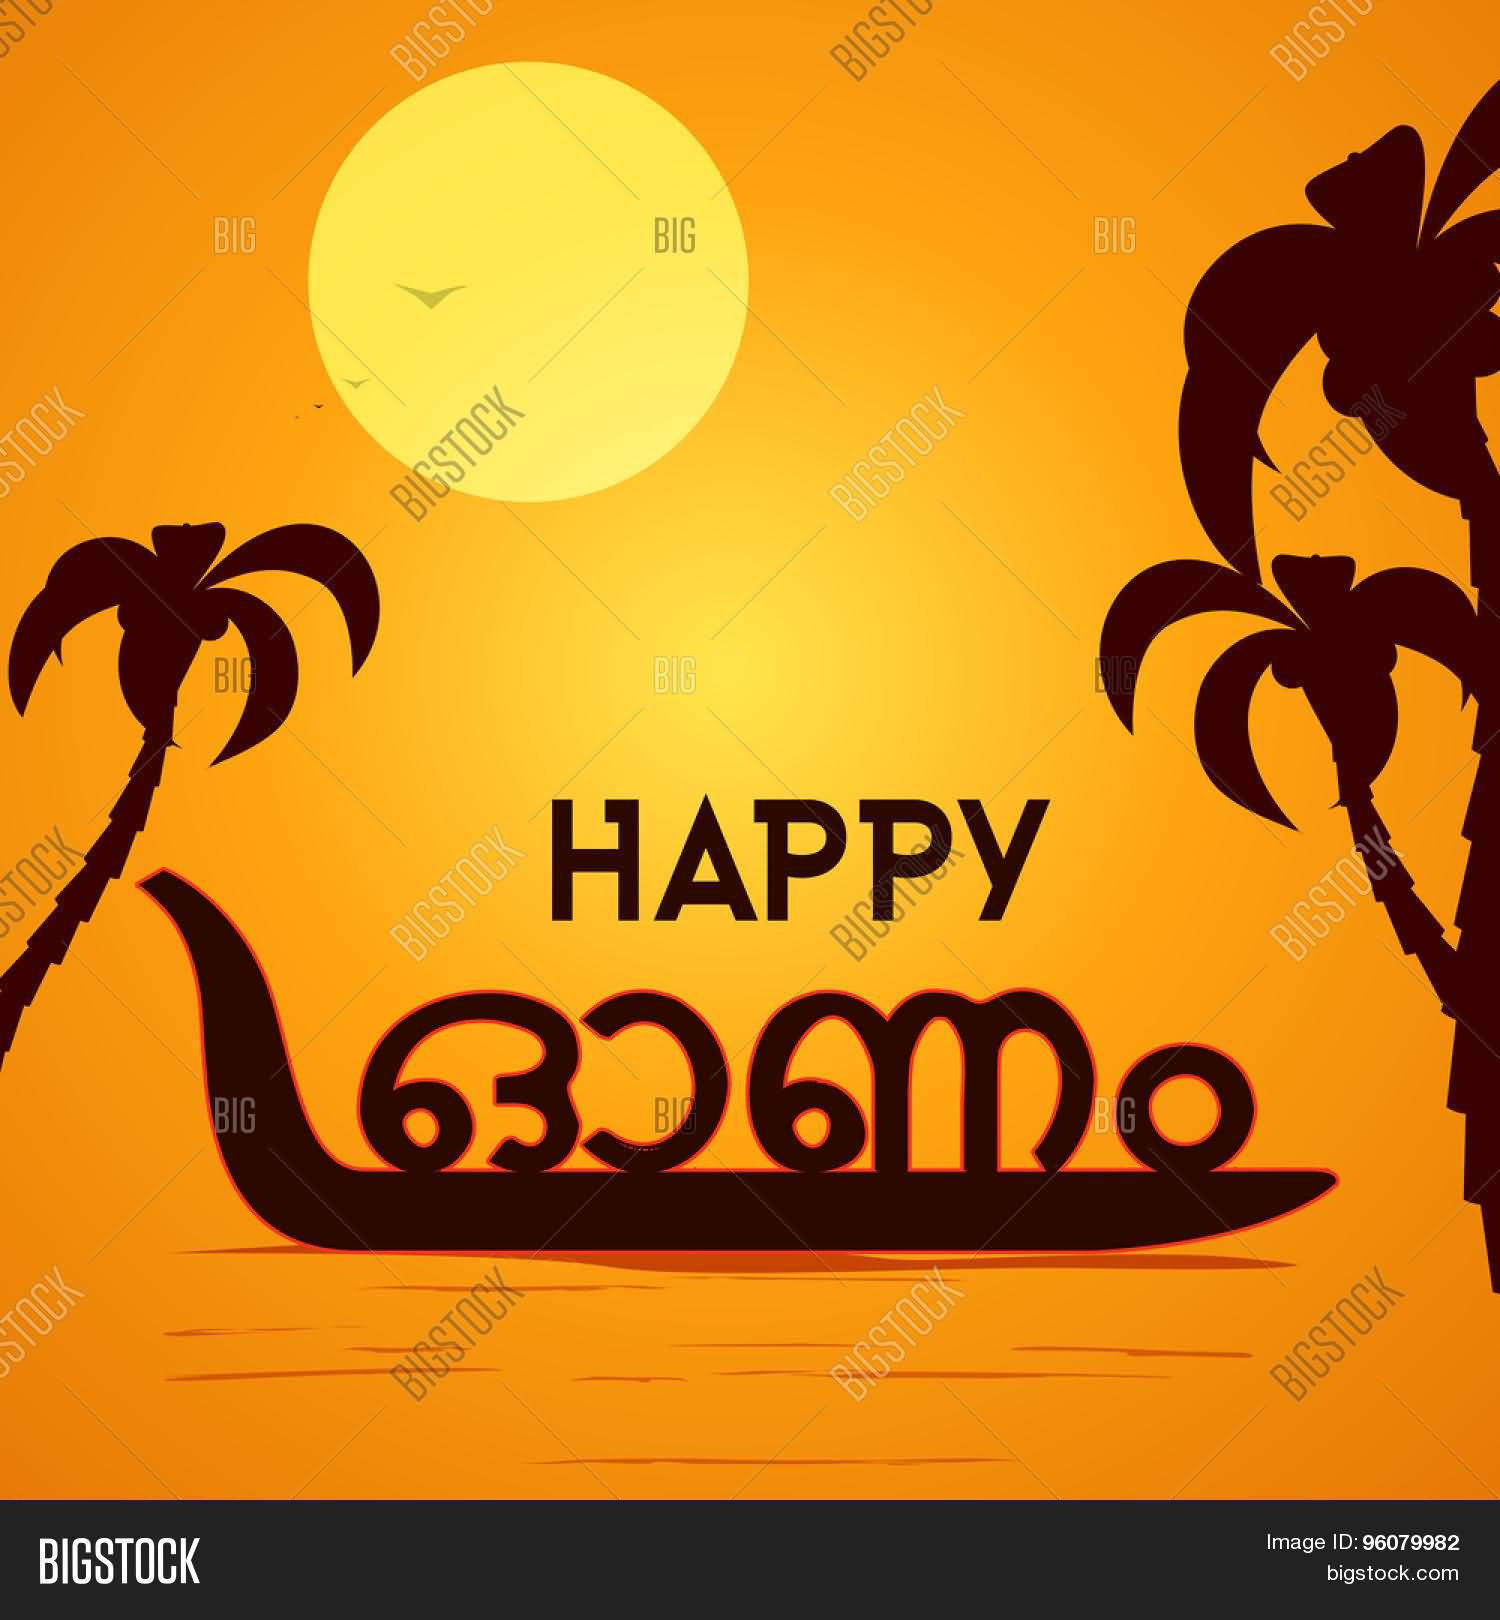 Happy Onam Wishes In Malayalam Sunset View Illustration